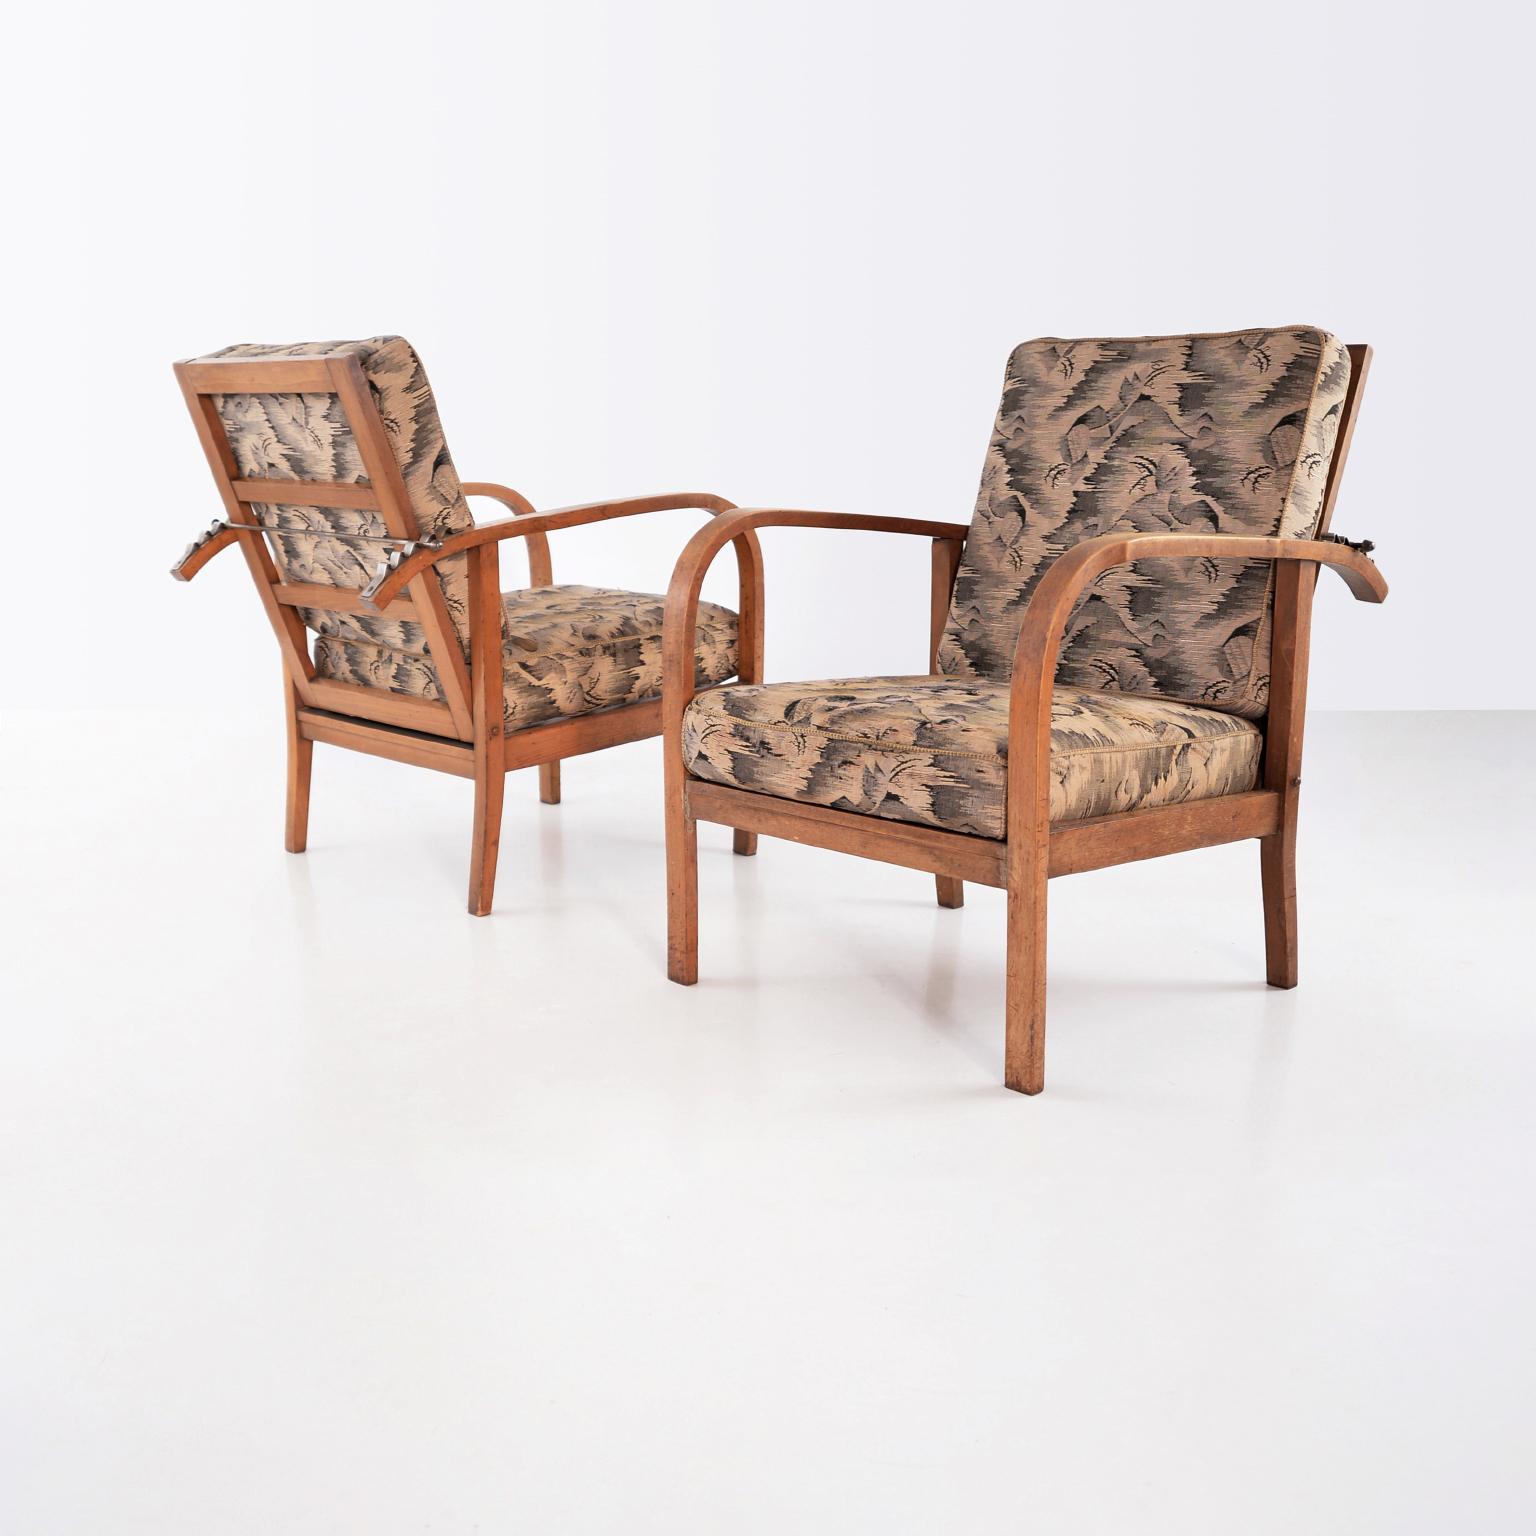 Czech Pair of Modernist Wooden Armchairs by Jan Vaněk, Original Upholstery, circa 1935 For Sale